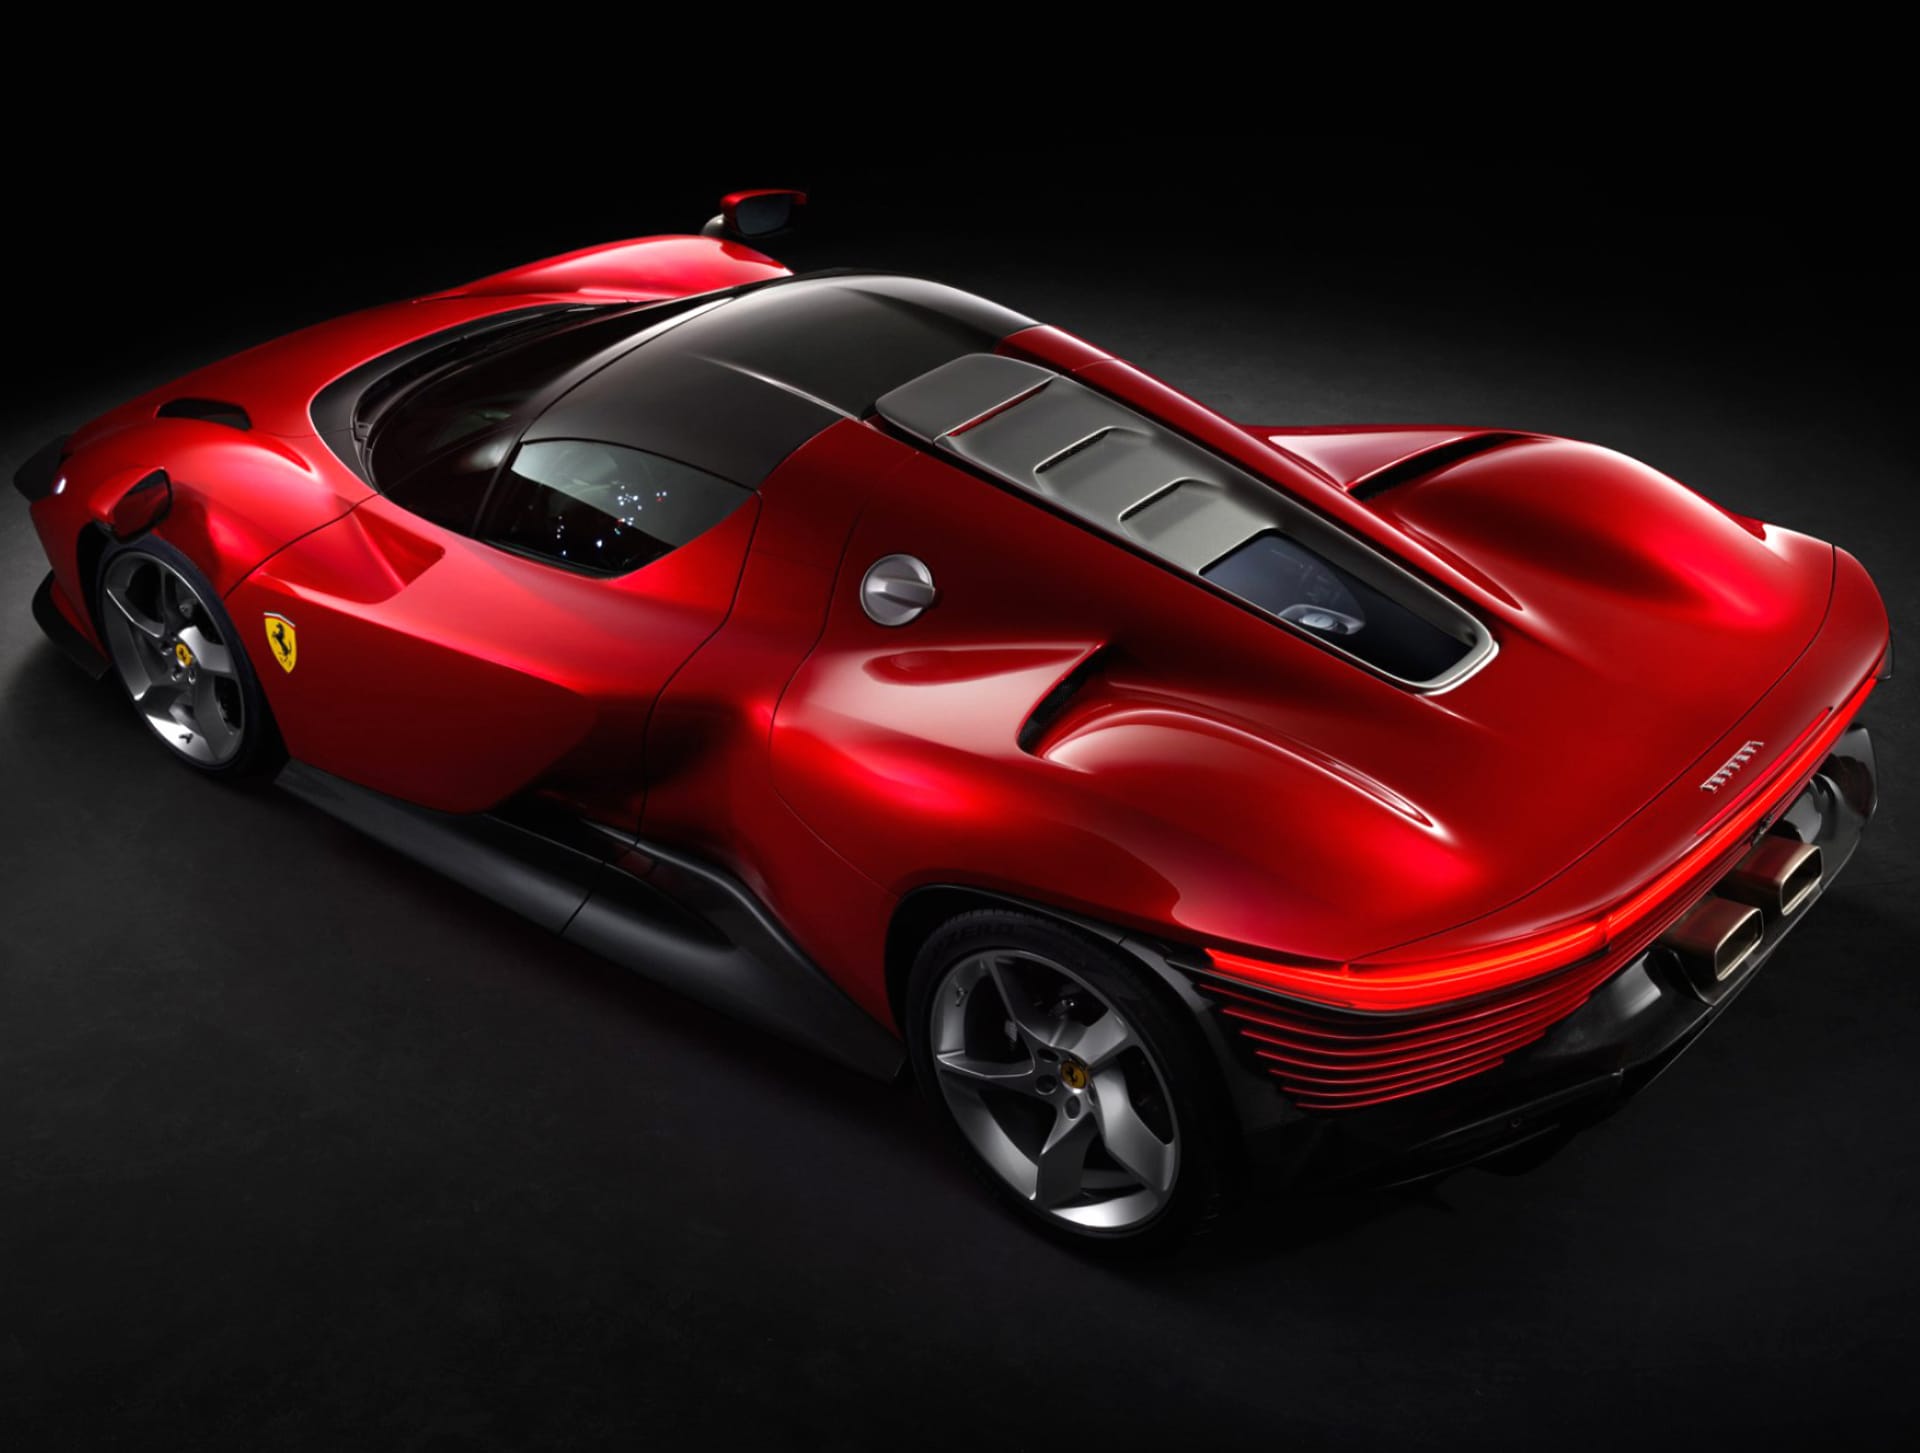 Ferrari Daytona SP3 at 640 x 960 iPhone 4 size wallpapers HD quality